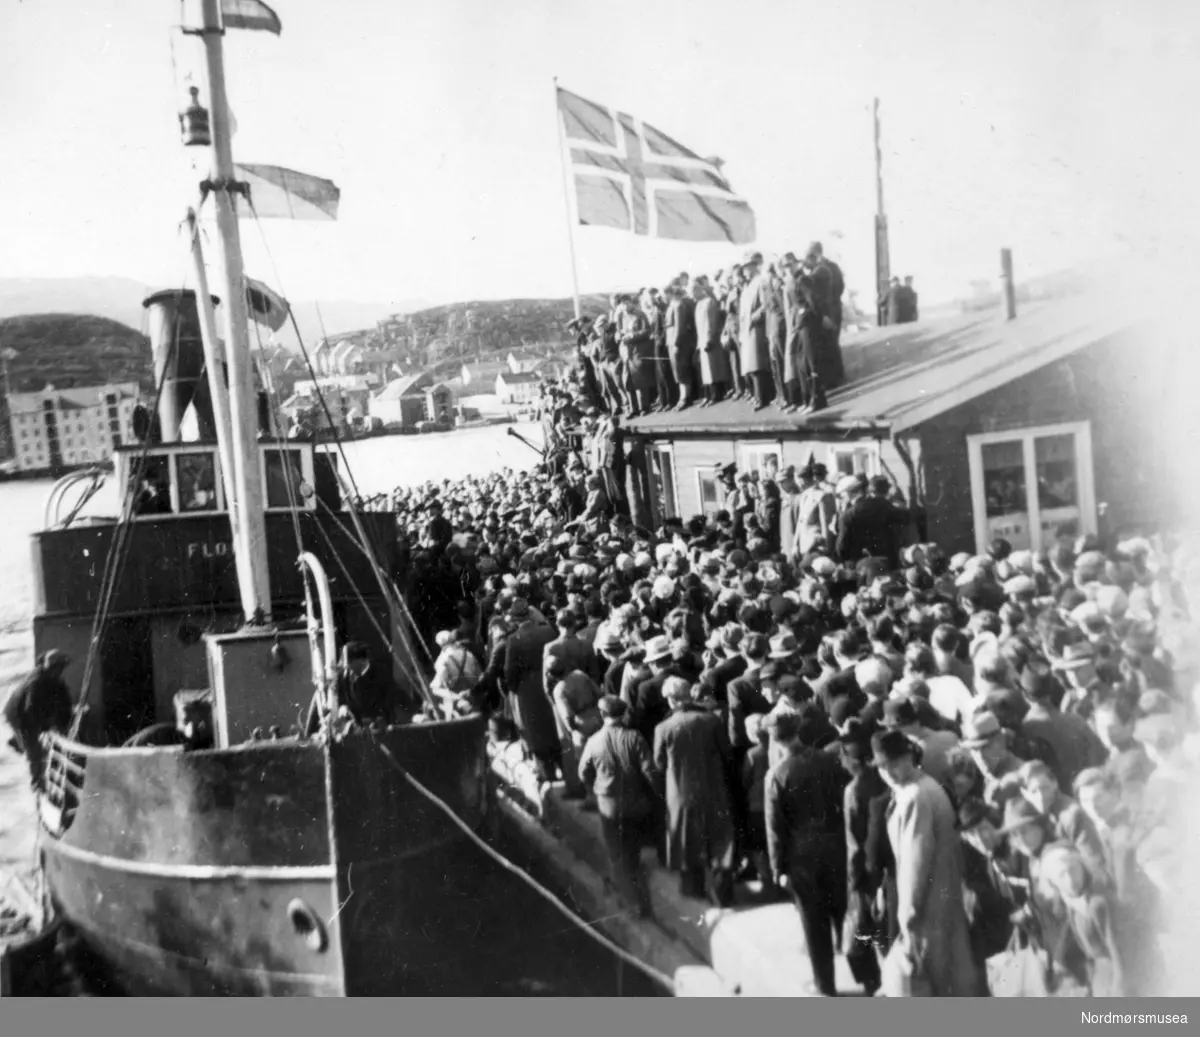 Nordmørskaia, "Devoldholmen", 17.mai 1945, folkemengde, båt, kai, Fra Nordmøre Museum sin fotosamling.